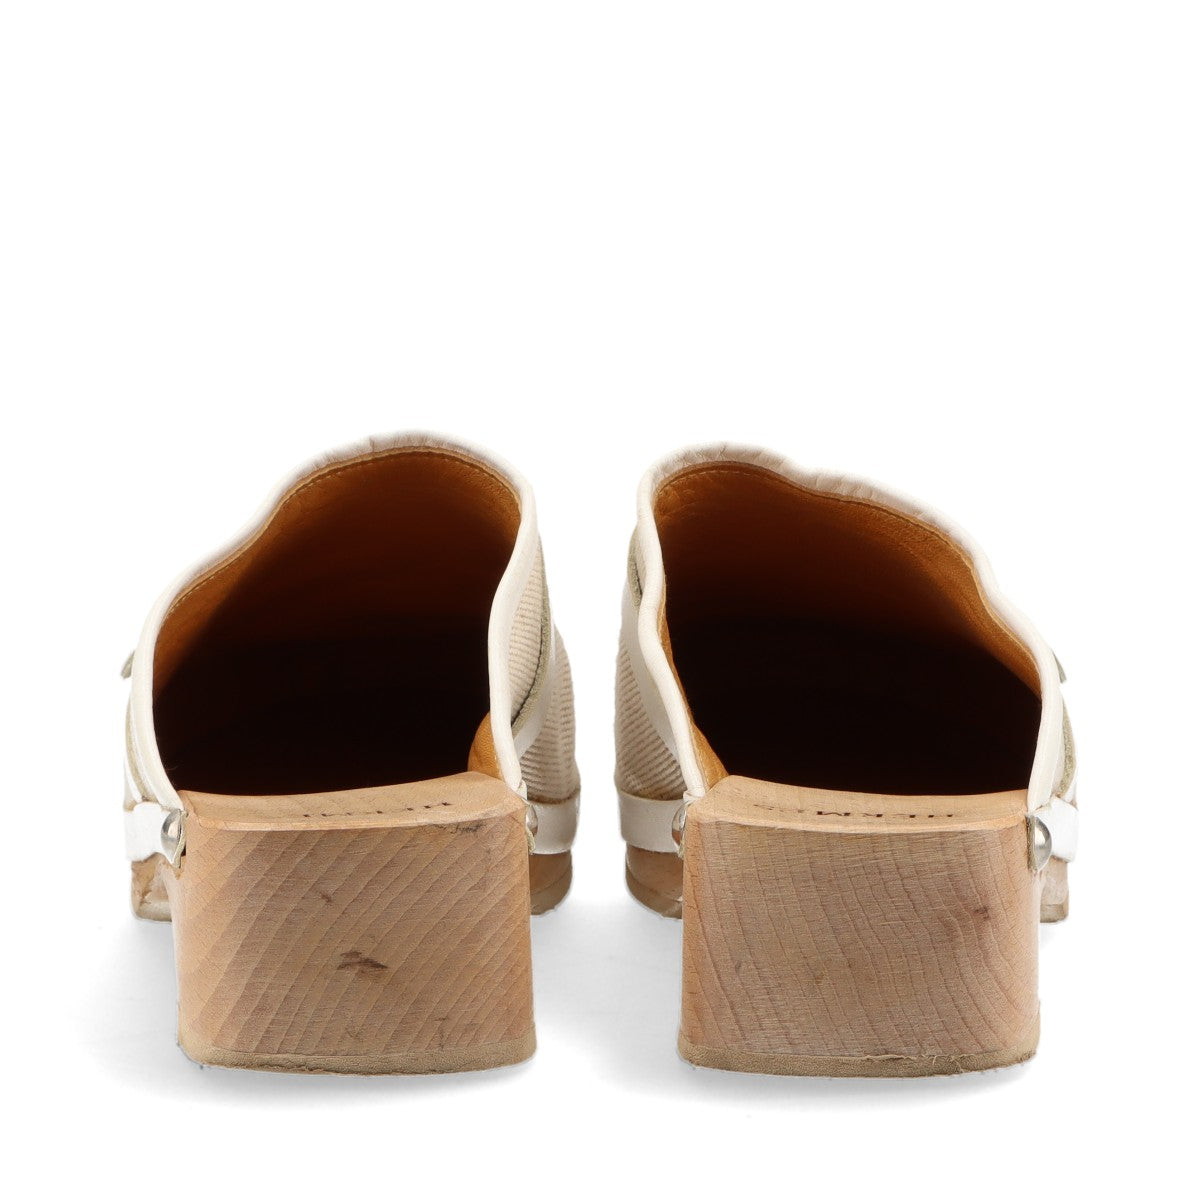 Hermès Canvas & Leather Sandals 35 Ladies' Beige x white Serie Button Wood sole